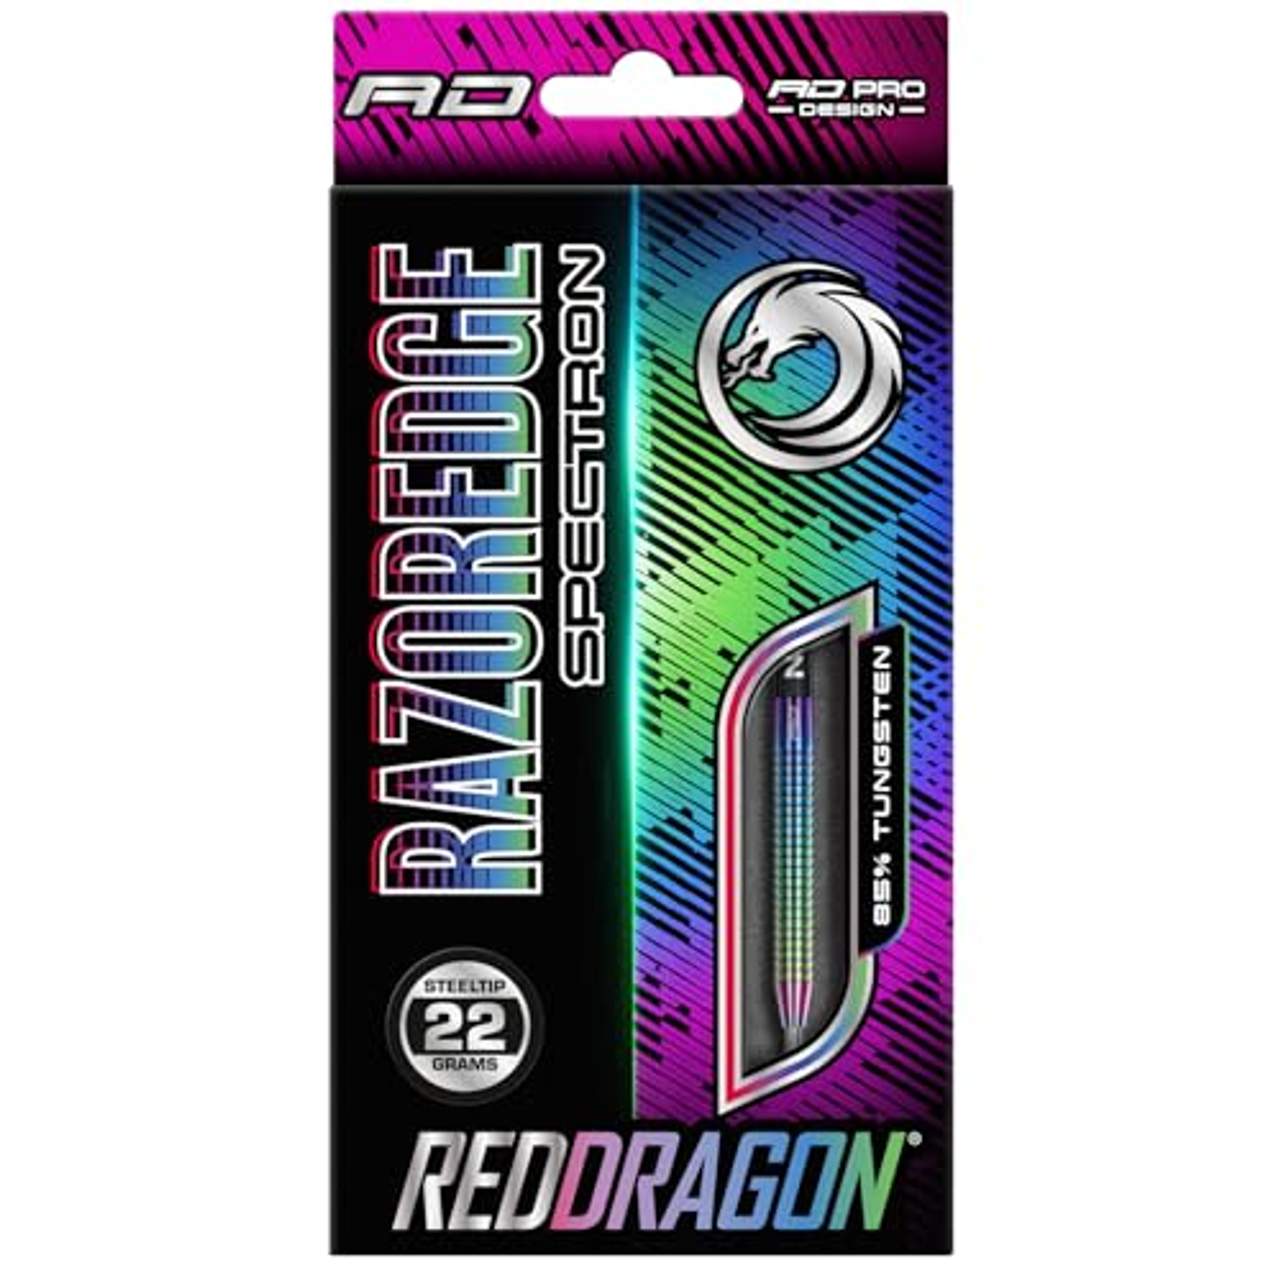 RED DRAGON Razor Edge Spectron Steel Dartpfeile 22 Gramm Profi Steeldarts